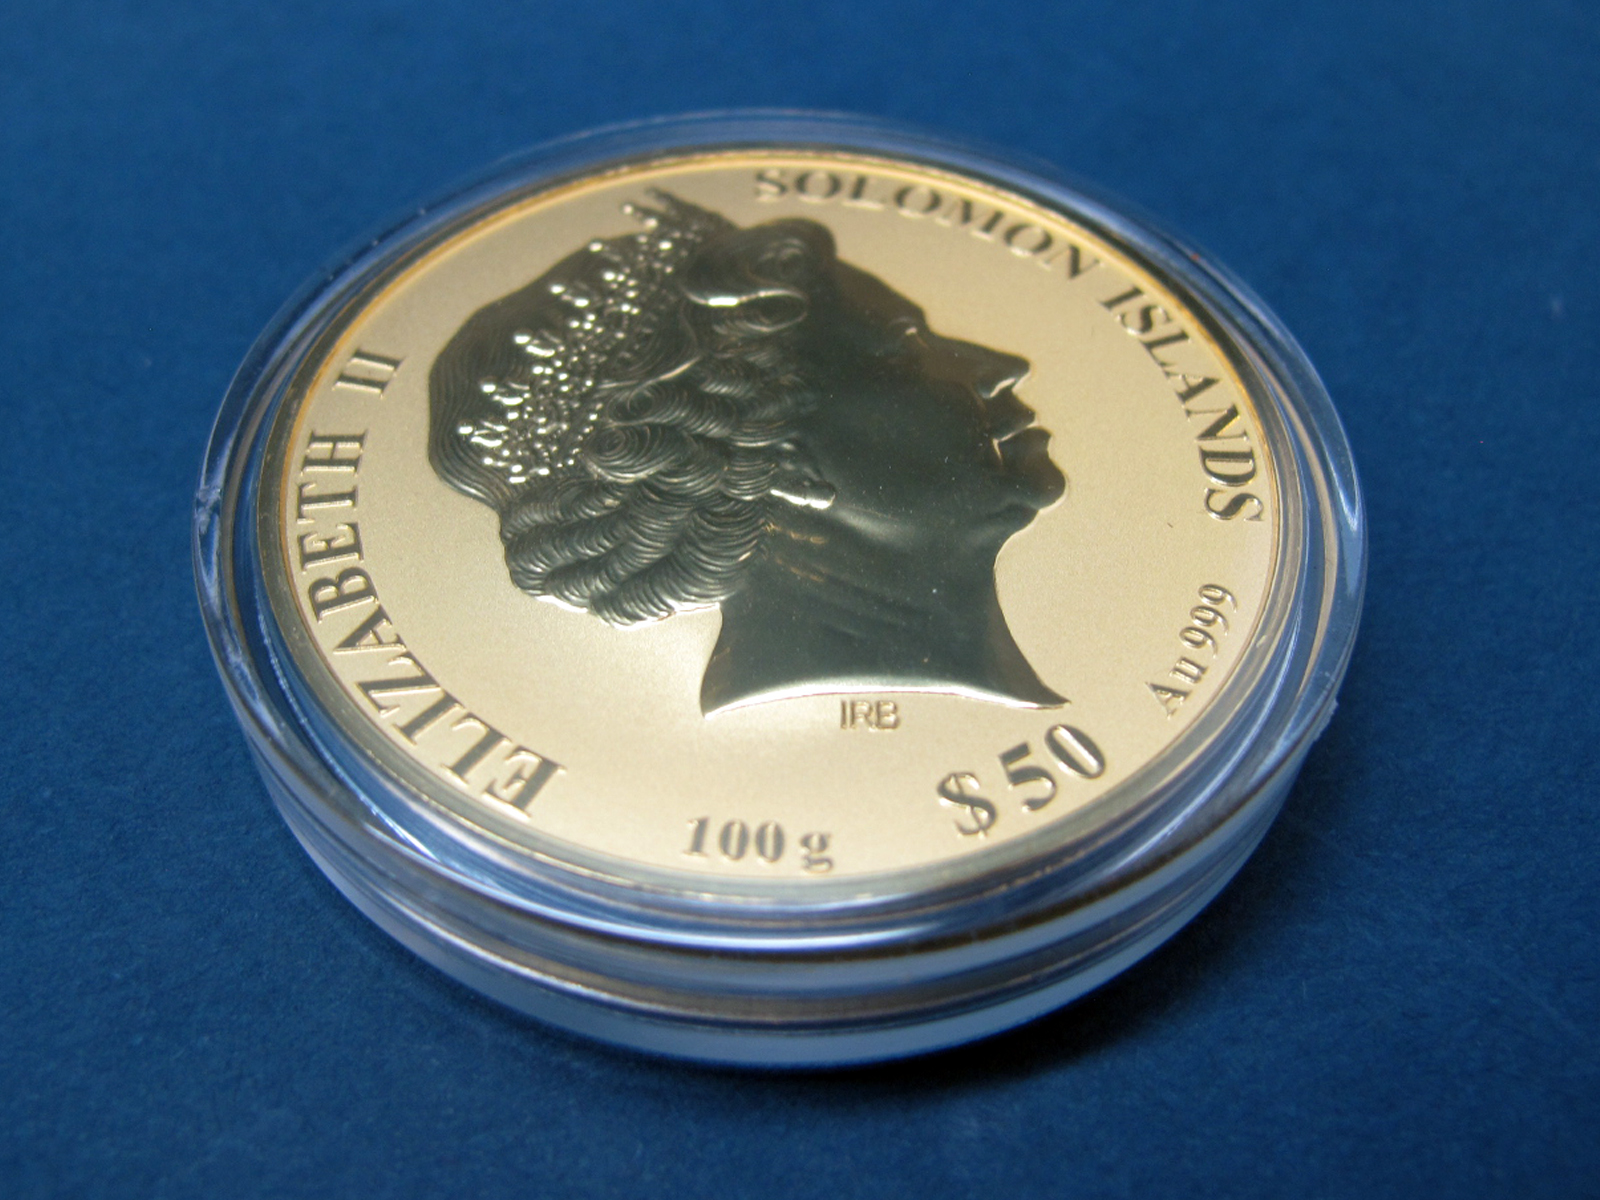 Solomon Islands TAJ Mahal 2020, Fifty Dollar Gold Reverse Proof Coin, .999 gold, 100g, diameter - Image 2 of 3